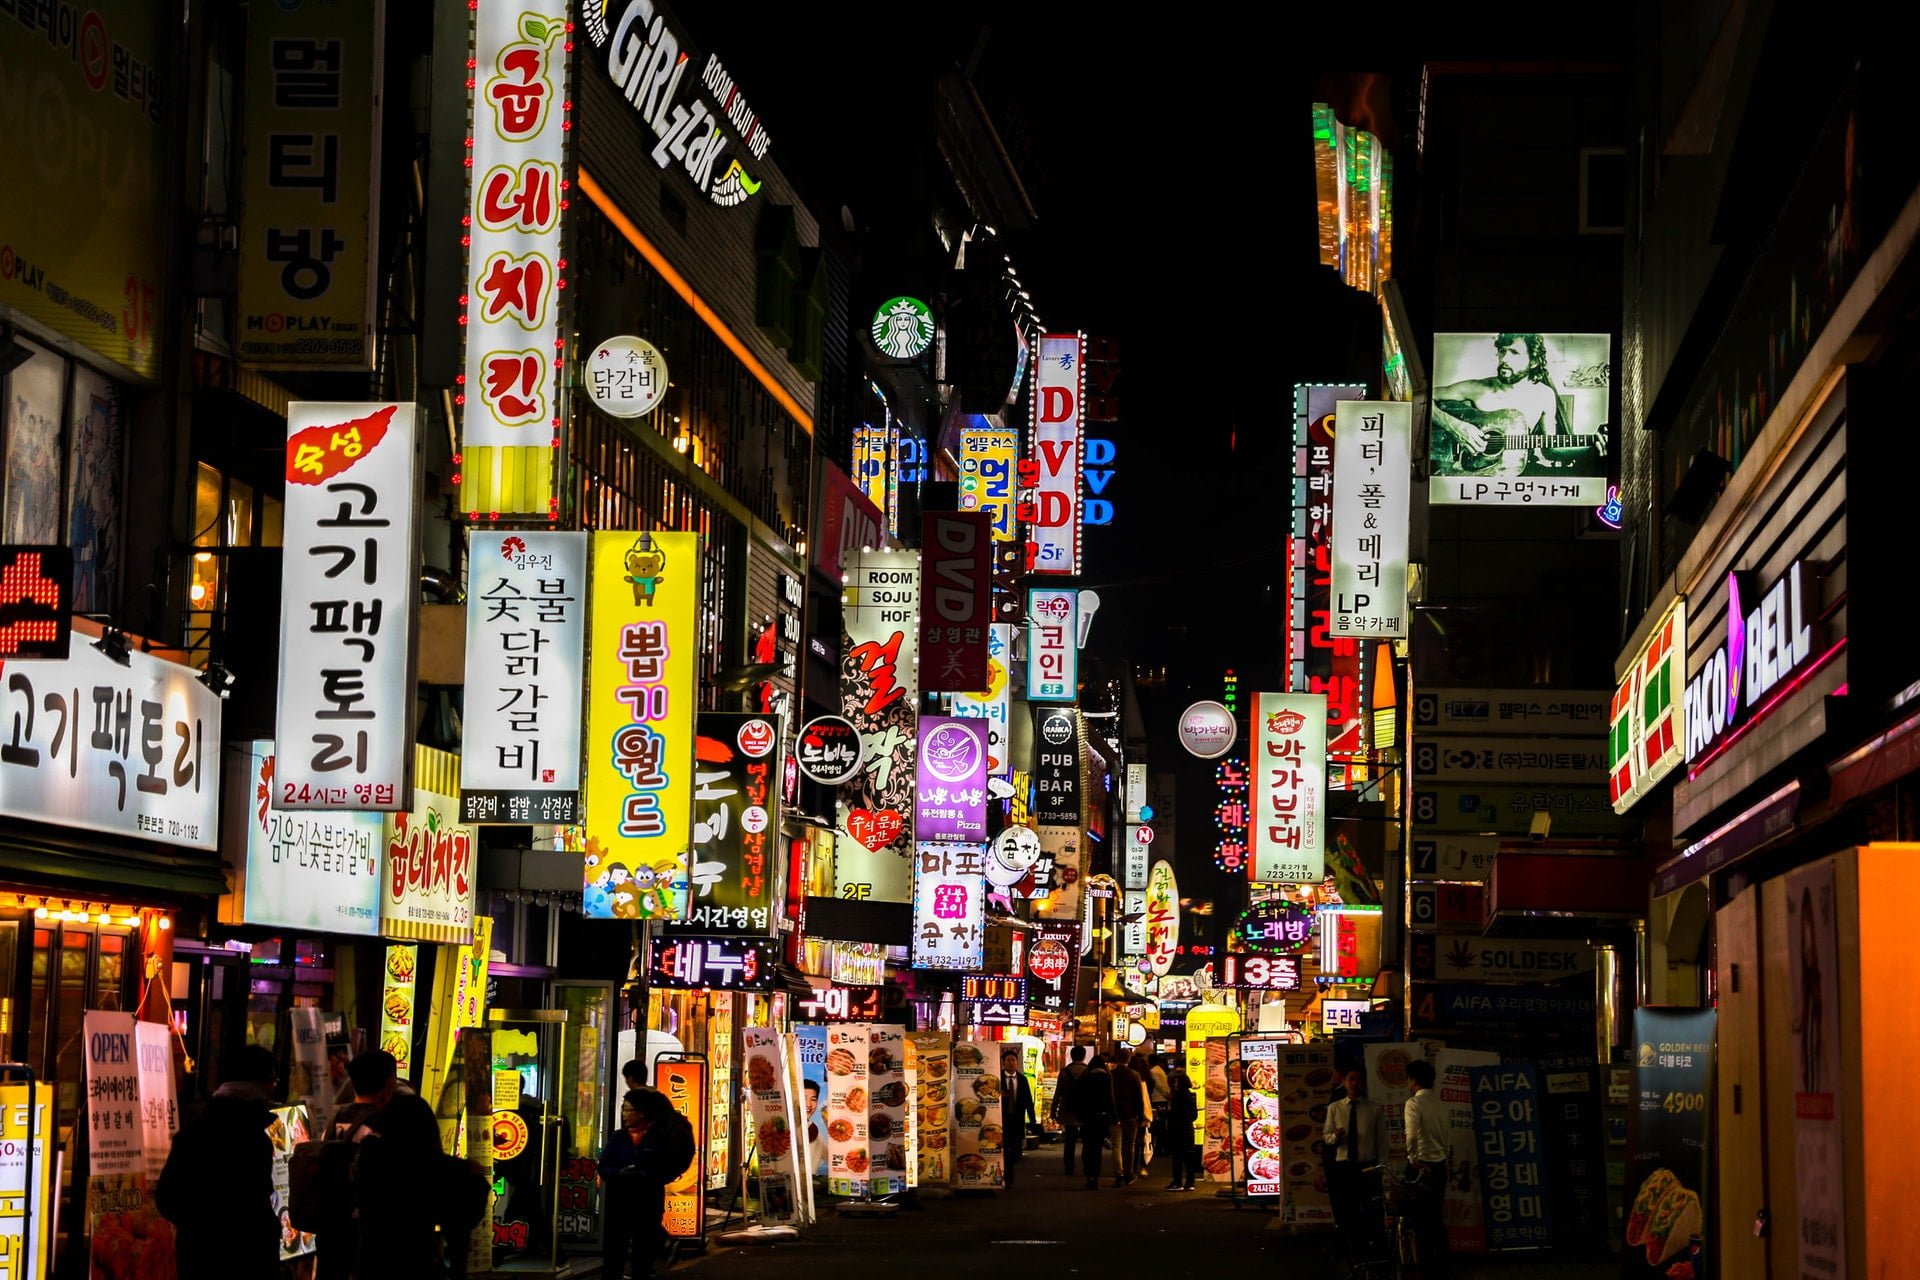 全球最適合旅行國家 2018 年前三名推薦 south Korea street architecture building business restaurant signboard night